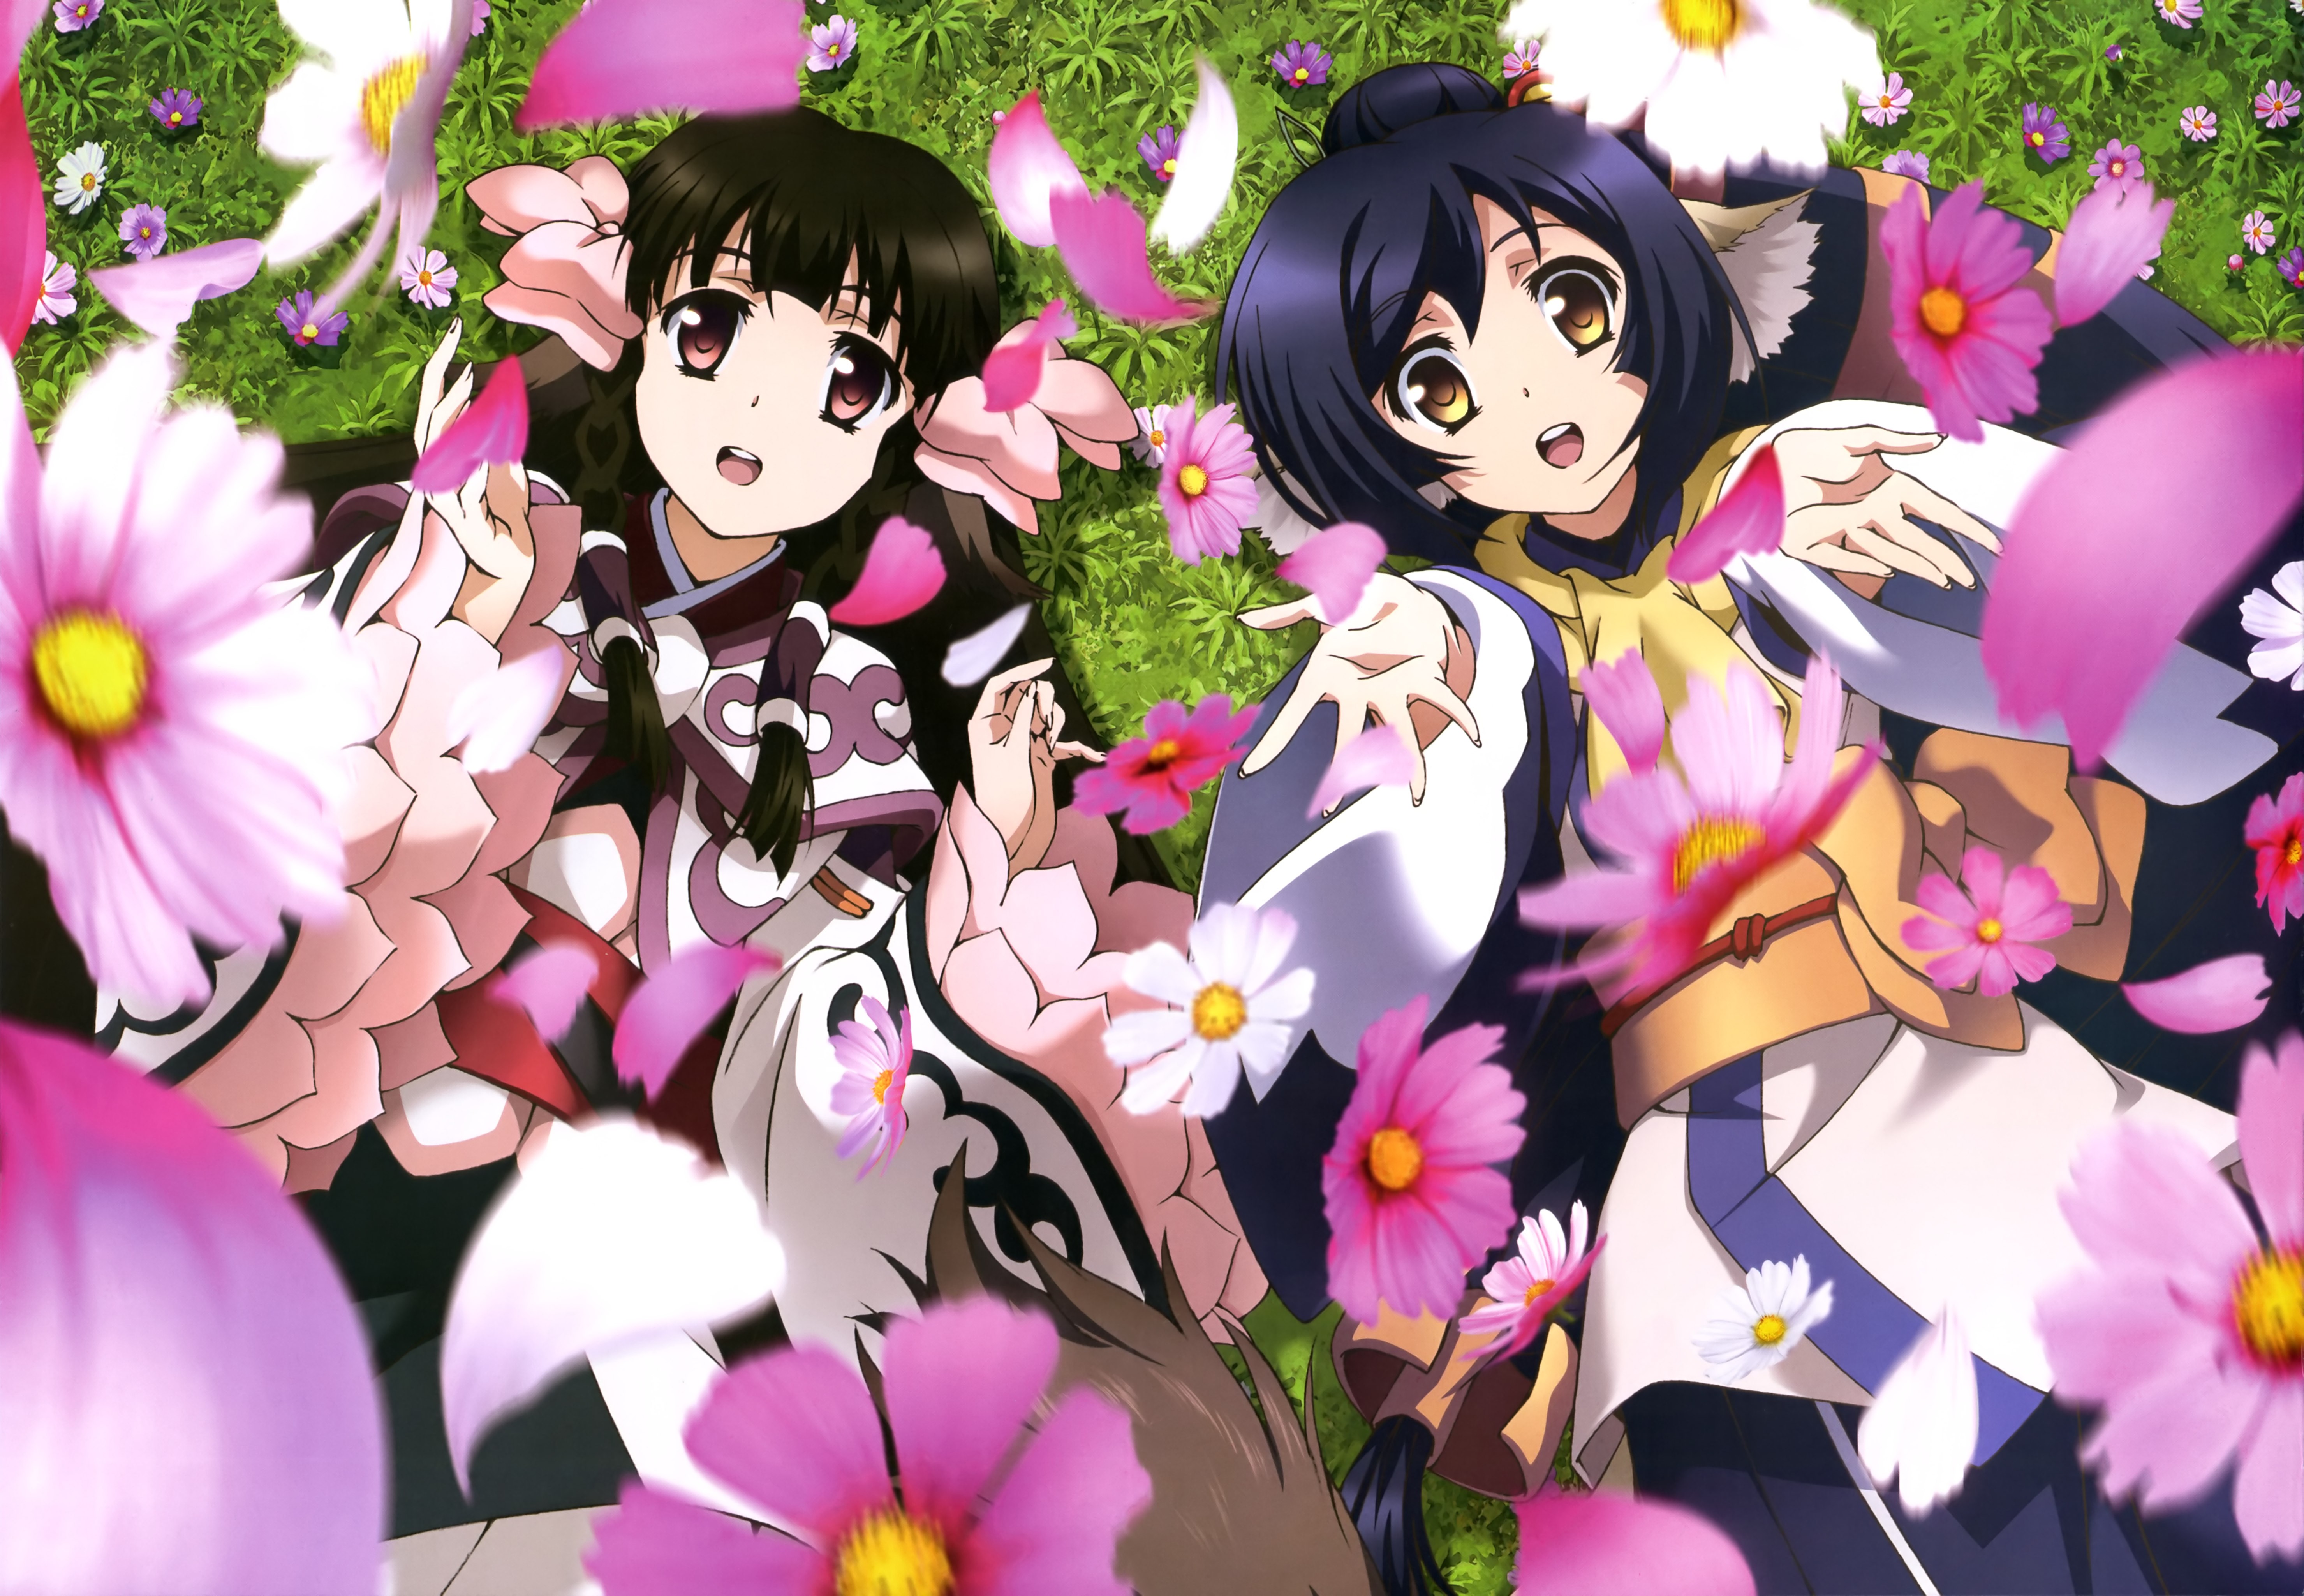 Anime 5916x4098 Utawarerumono anime girls flowers anime two women black hair dark hair plants open mouth women outdoors petals